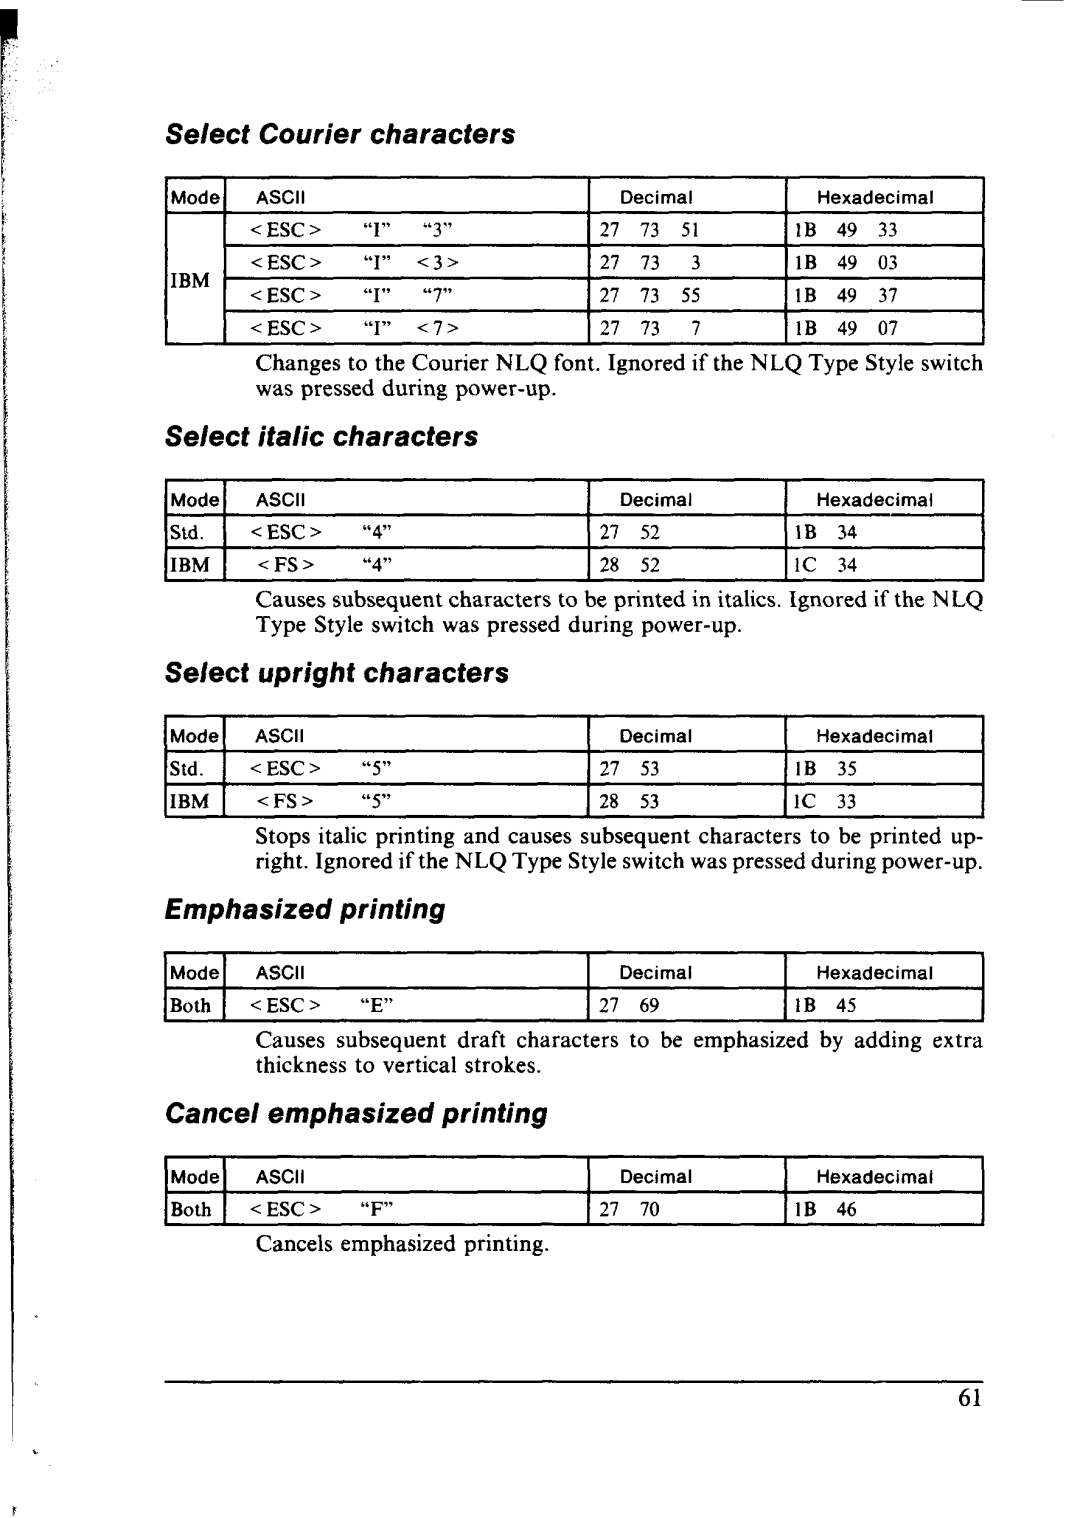 Star Micronics NX-1000 manual Emphasized printing, Cancel emphasized printing, Select, Courier, characters 